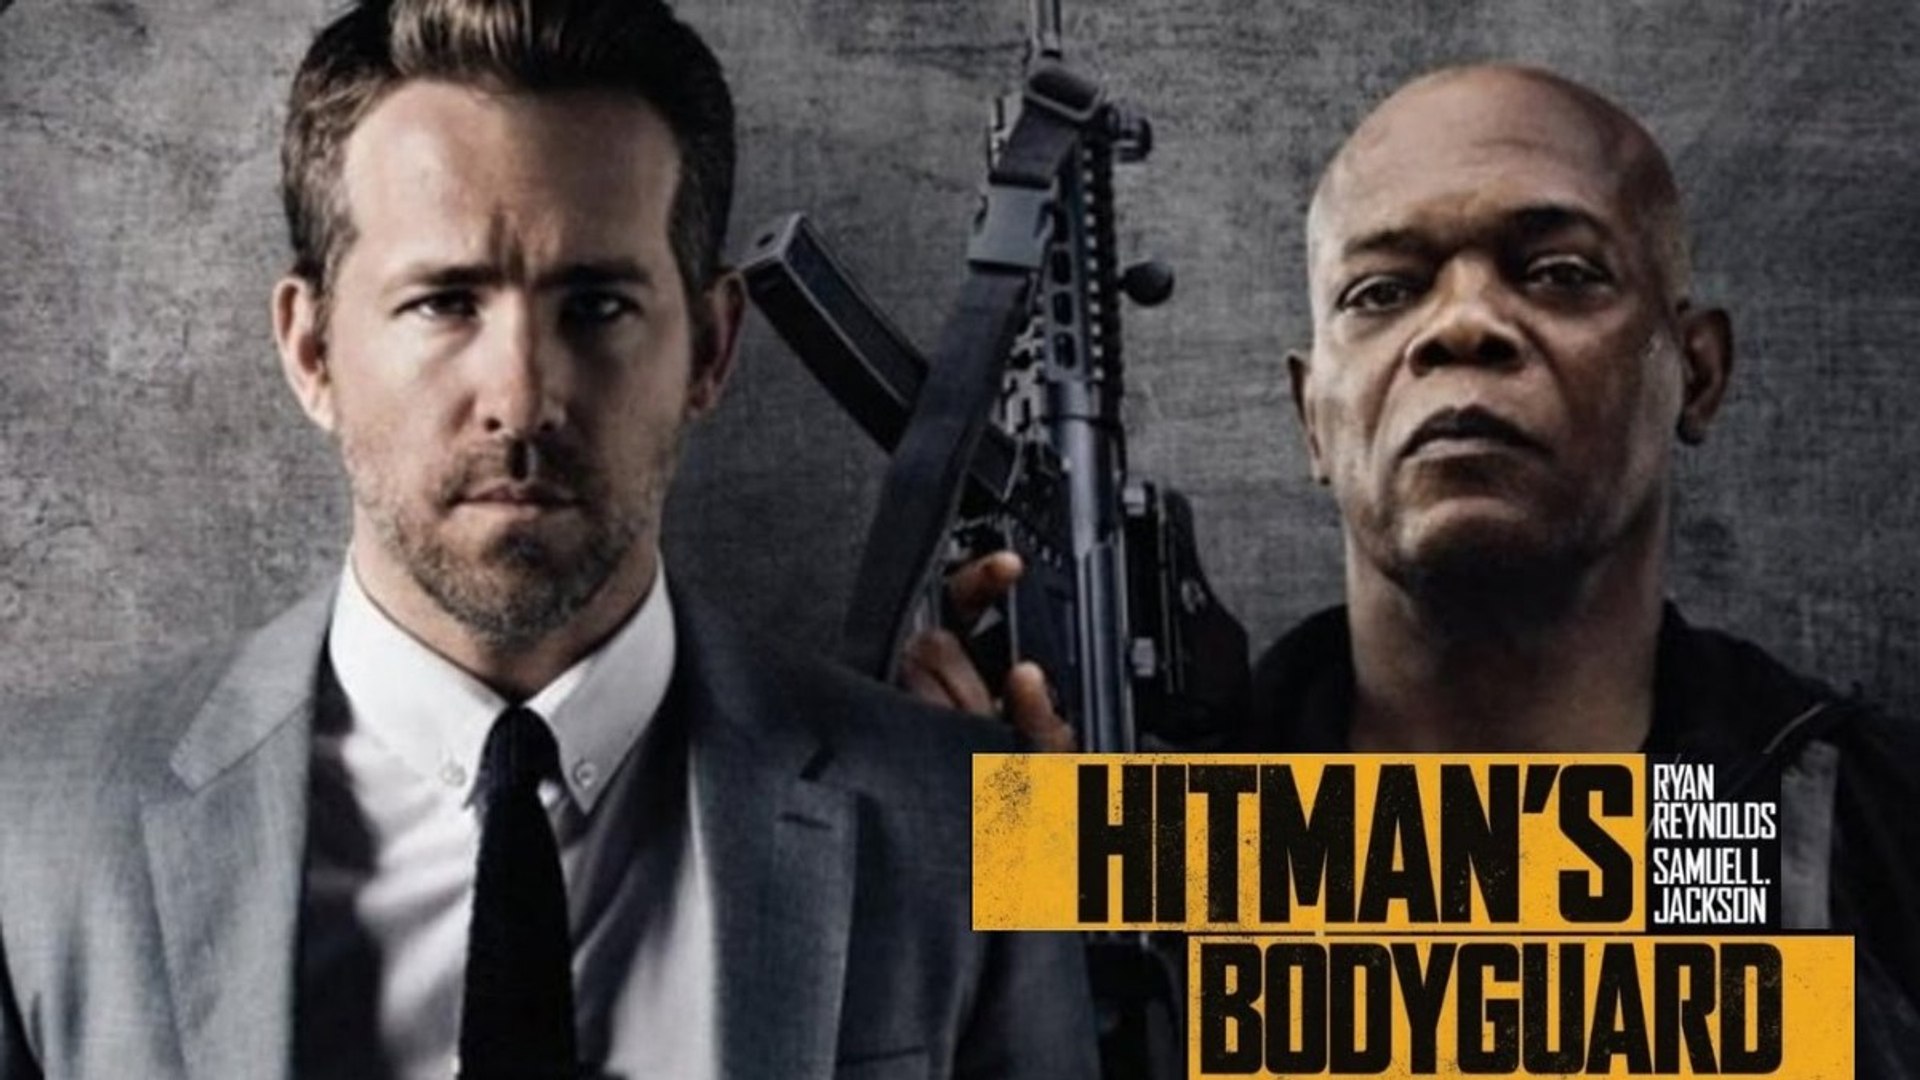 Hitman's Bodyguard Movie Review